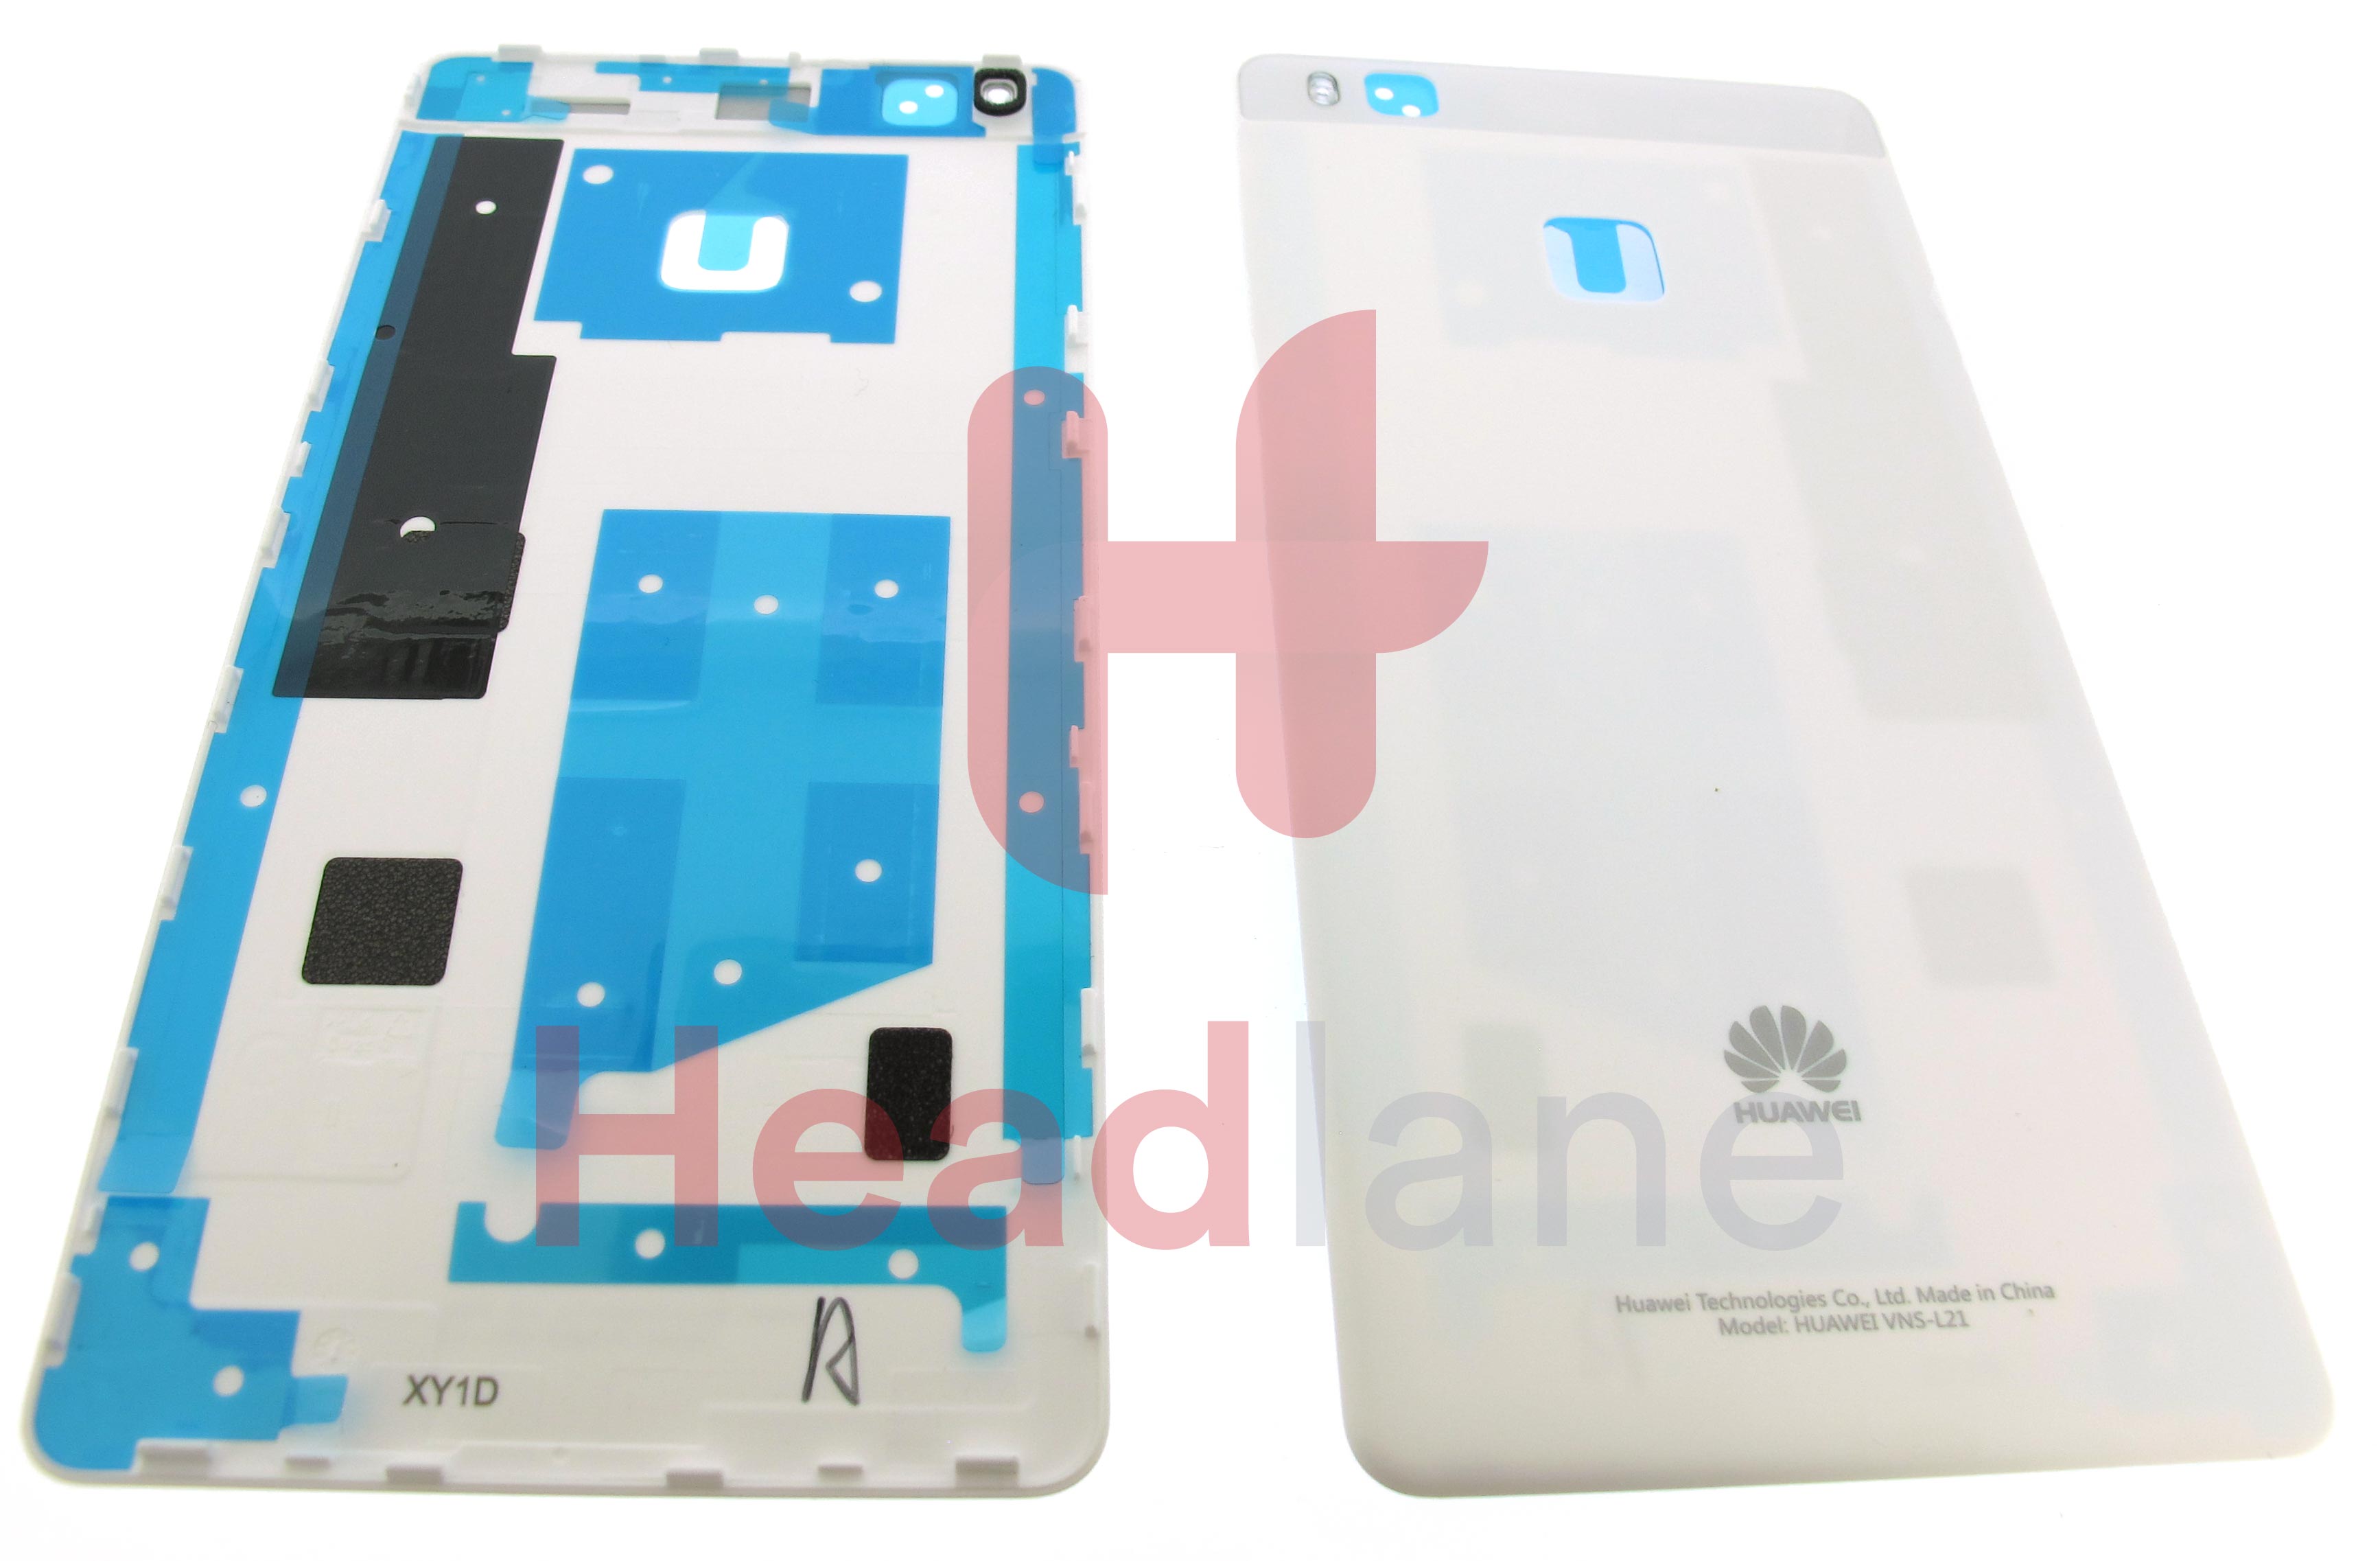 Huawei P9 Lite Battery Cover - White